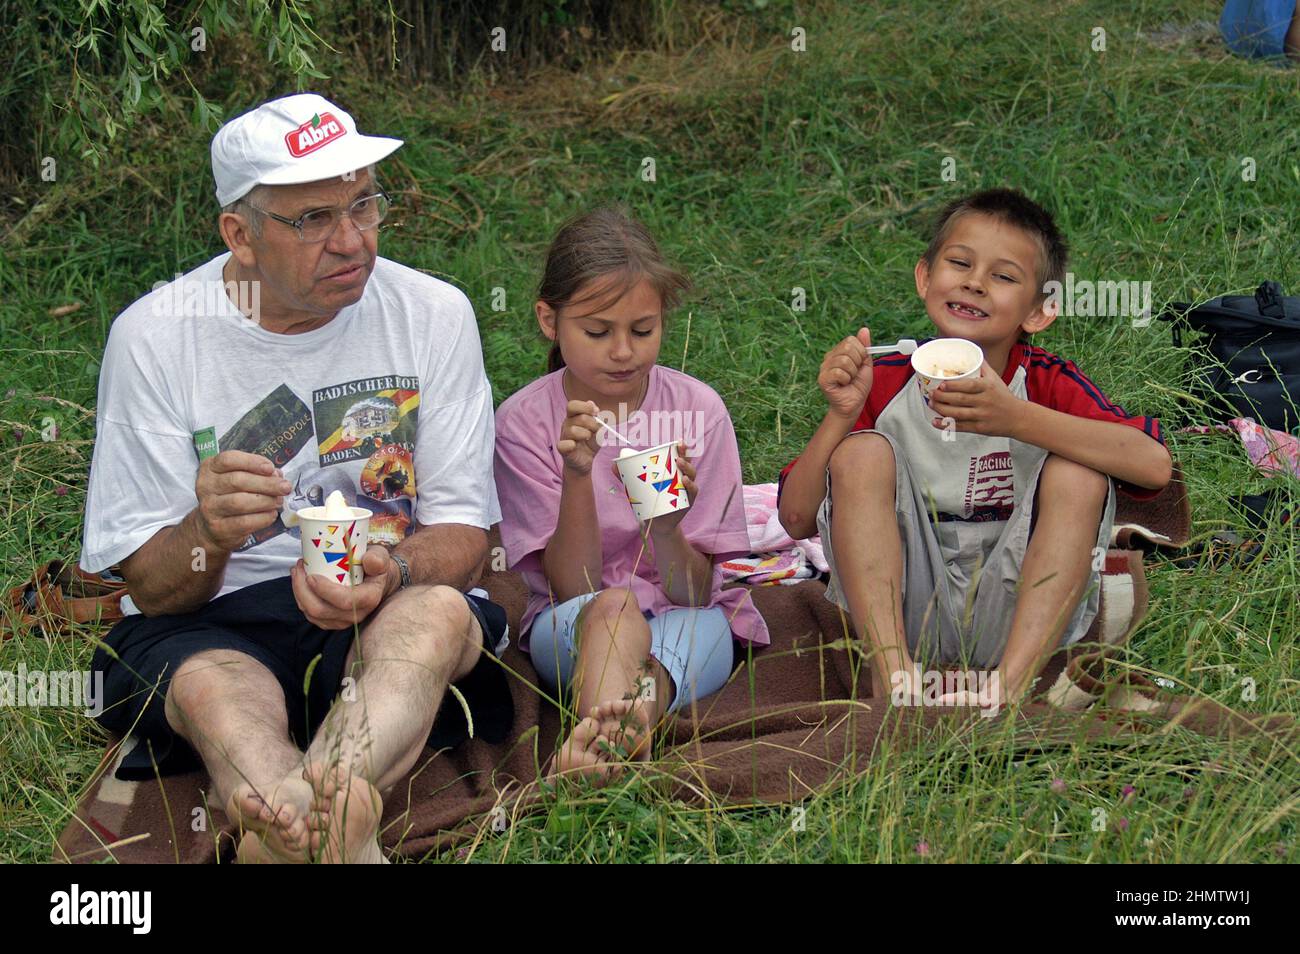 Brenno, Wielkopolska Greater Poland Großpolen, Polen, Polska; Grandfather and his grandchildren are eating ice cream during the picnic Dziadek i wnuki Stock Photo